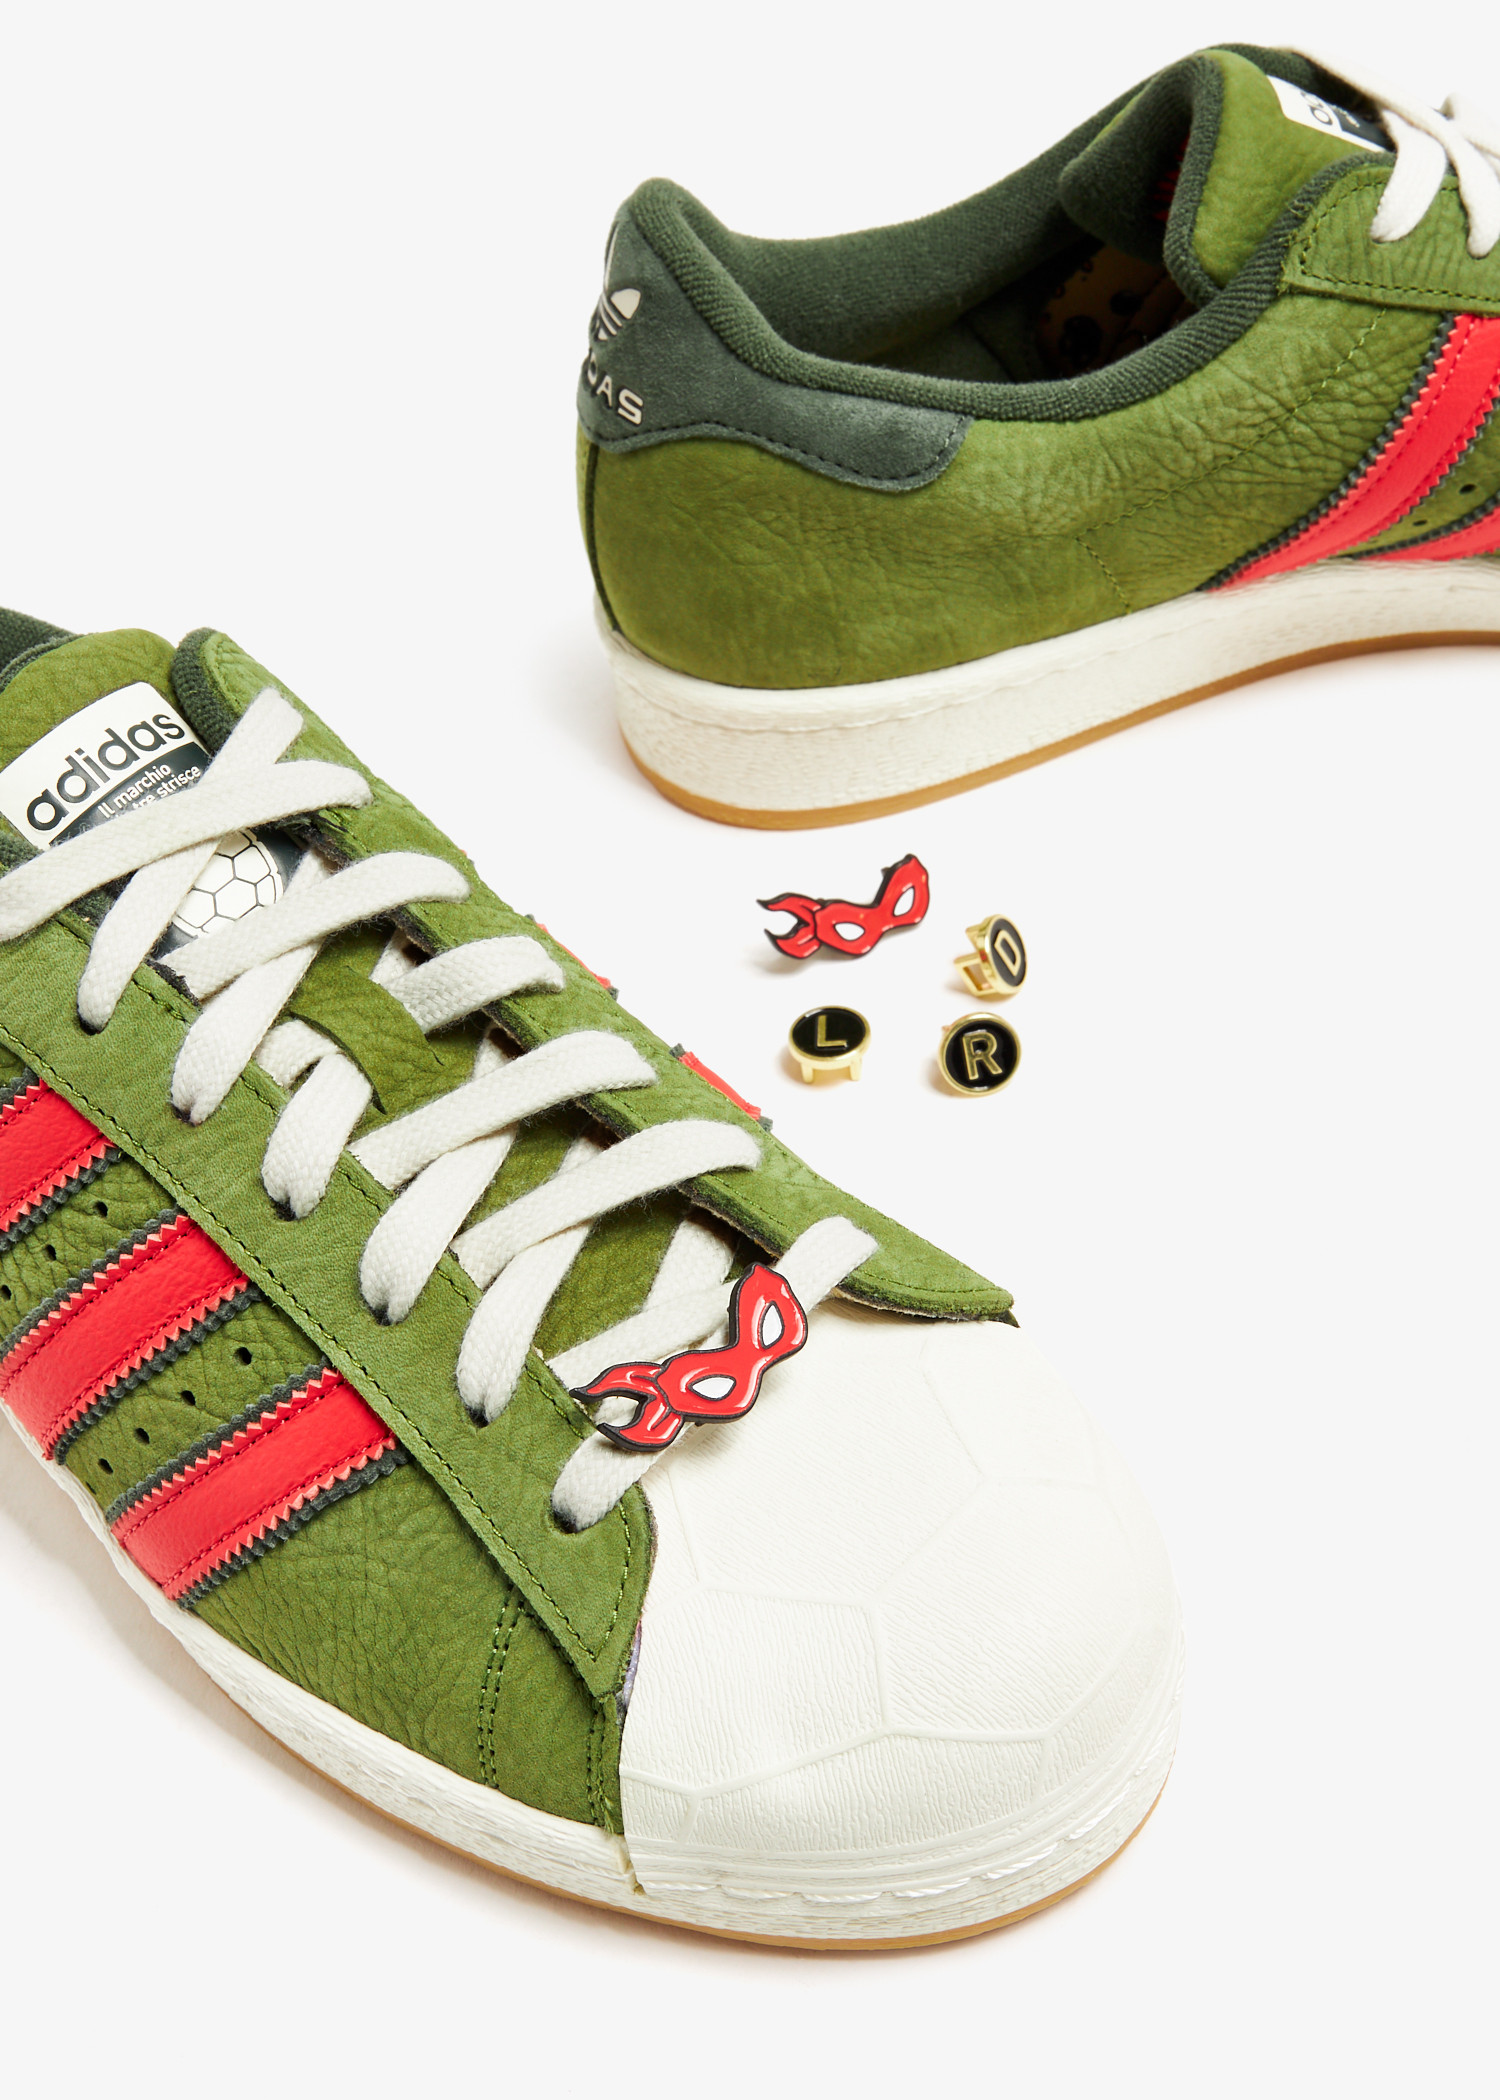 Adidas x TMNT Superstar 'Shelltoe' sneakers for Men - Green in KSA 